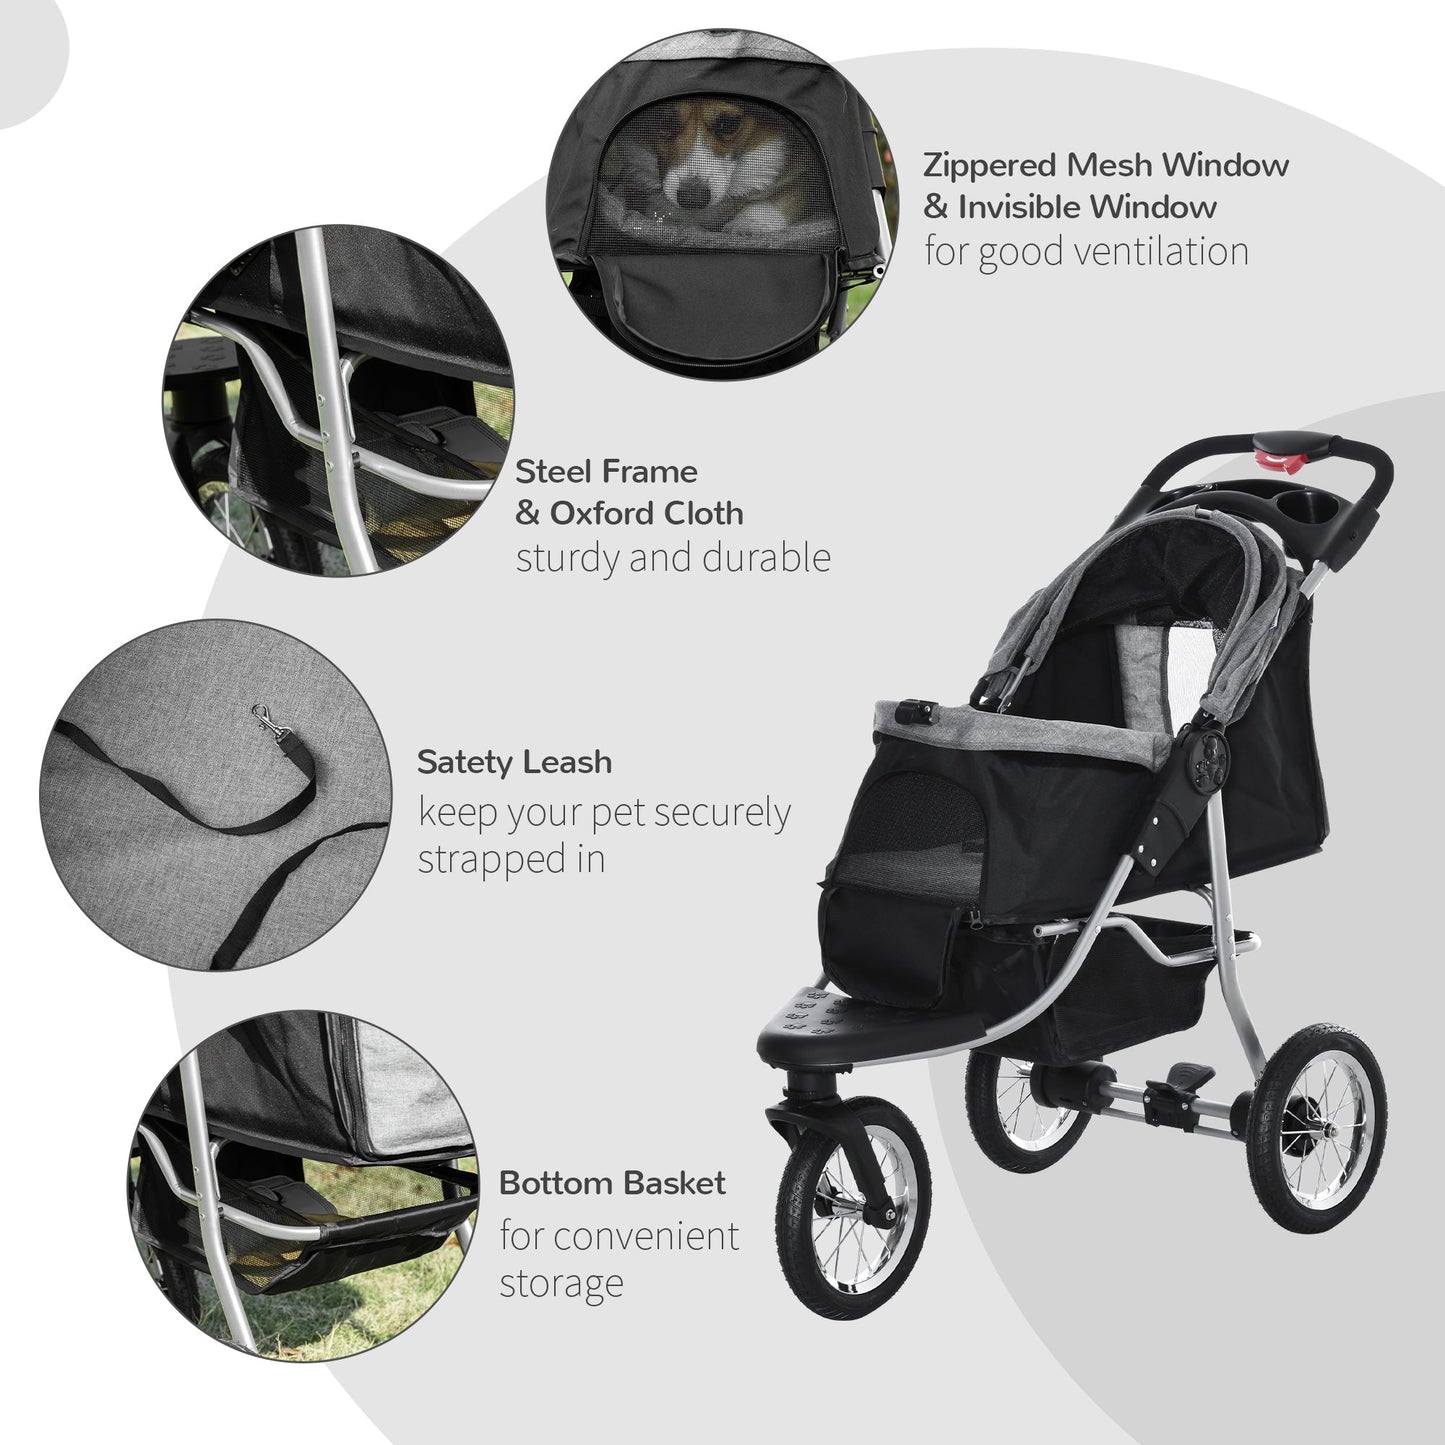 Pet Stroller with 3 Wheels, One-click Folding Design, Adjustable Canopy, Zippered Mesh Window Door, Grey - Gallery Canada